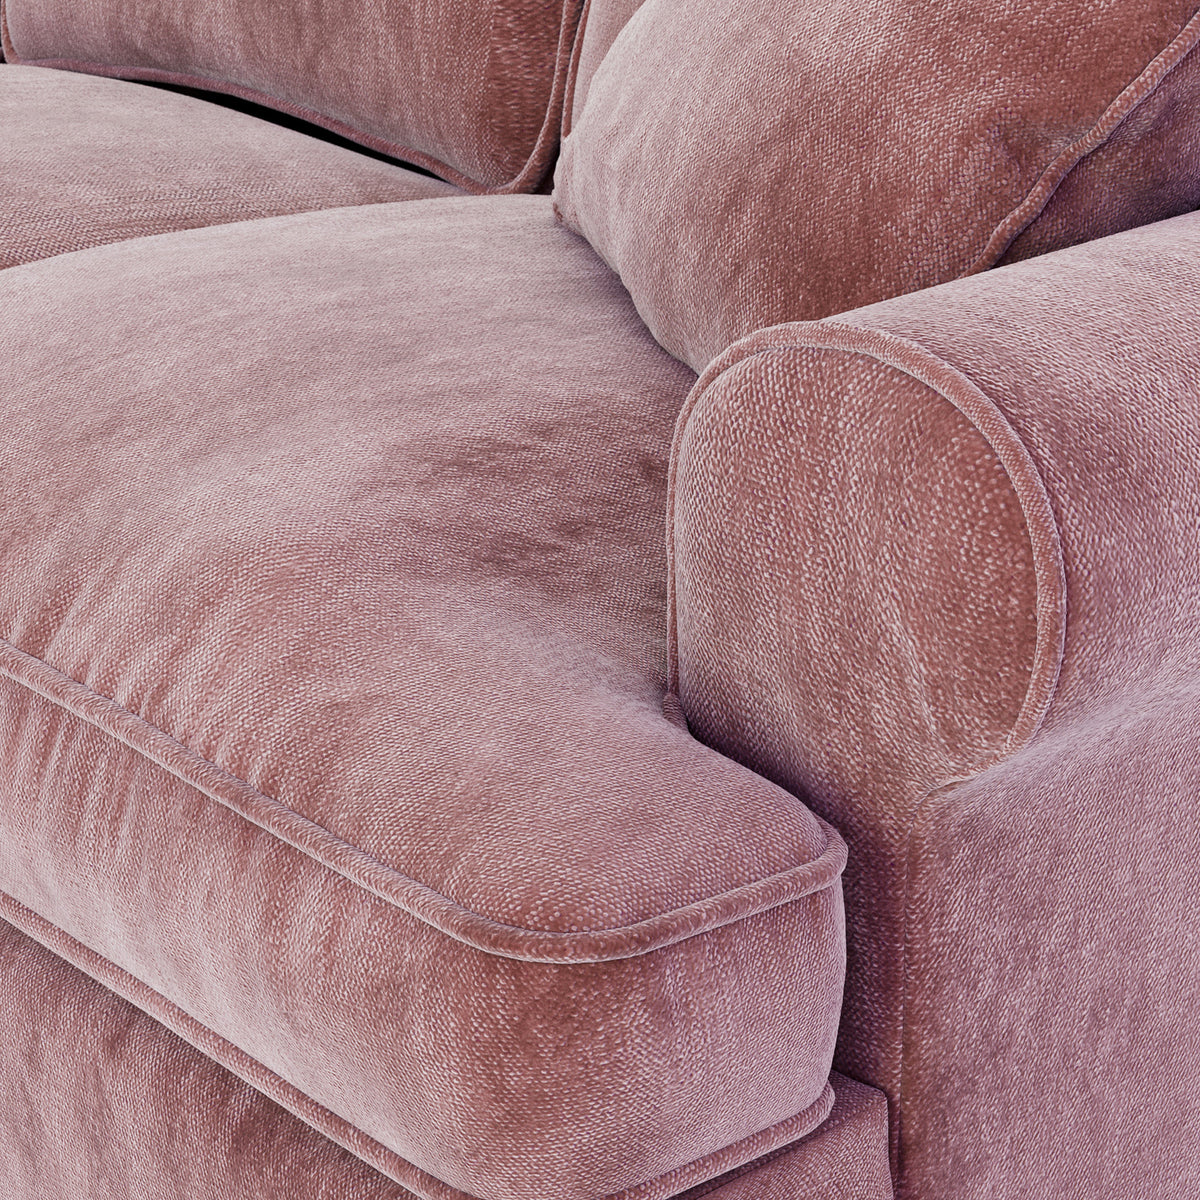 Alfie Plum Pink 3 Seater Sofa from Roseland Furniture